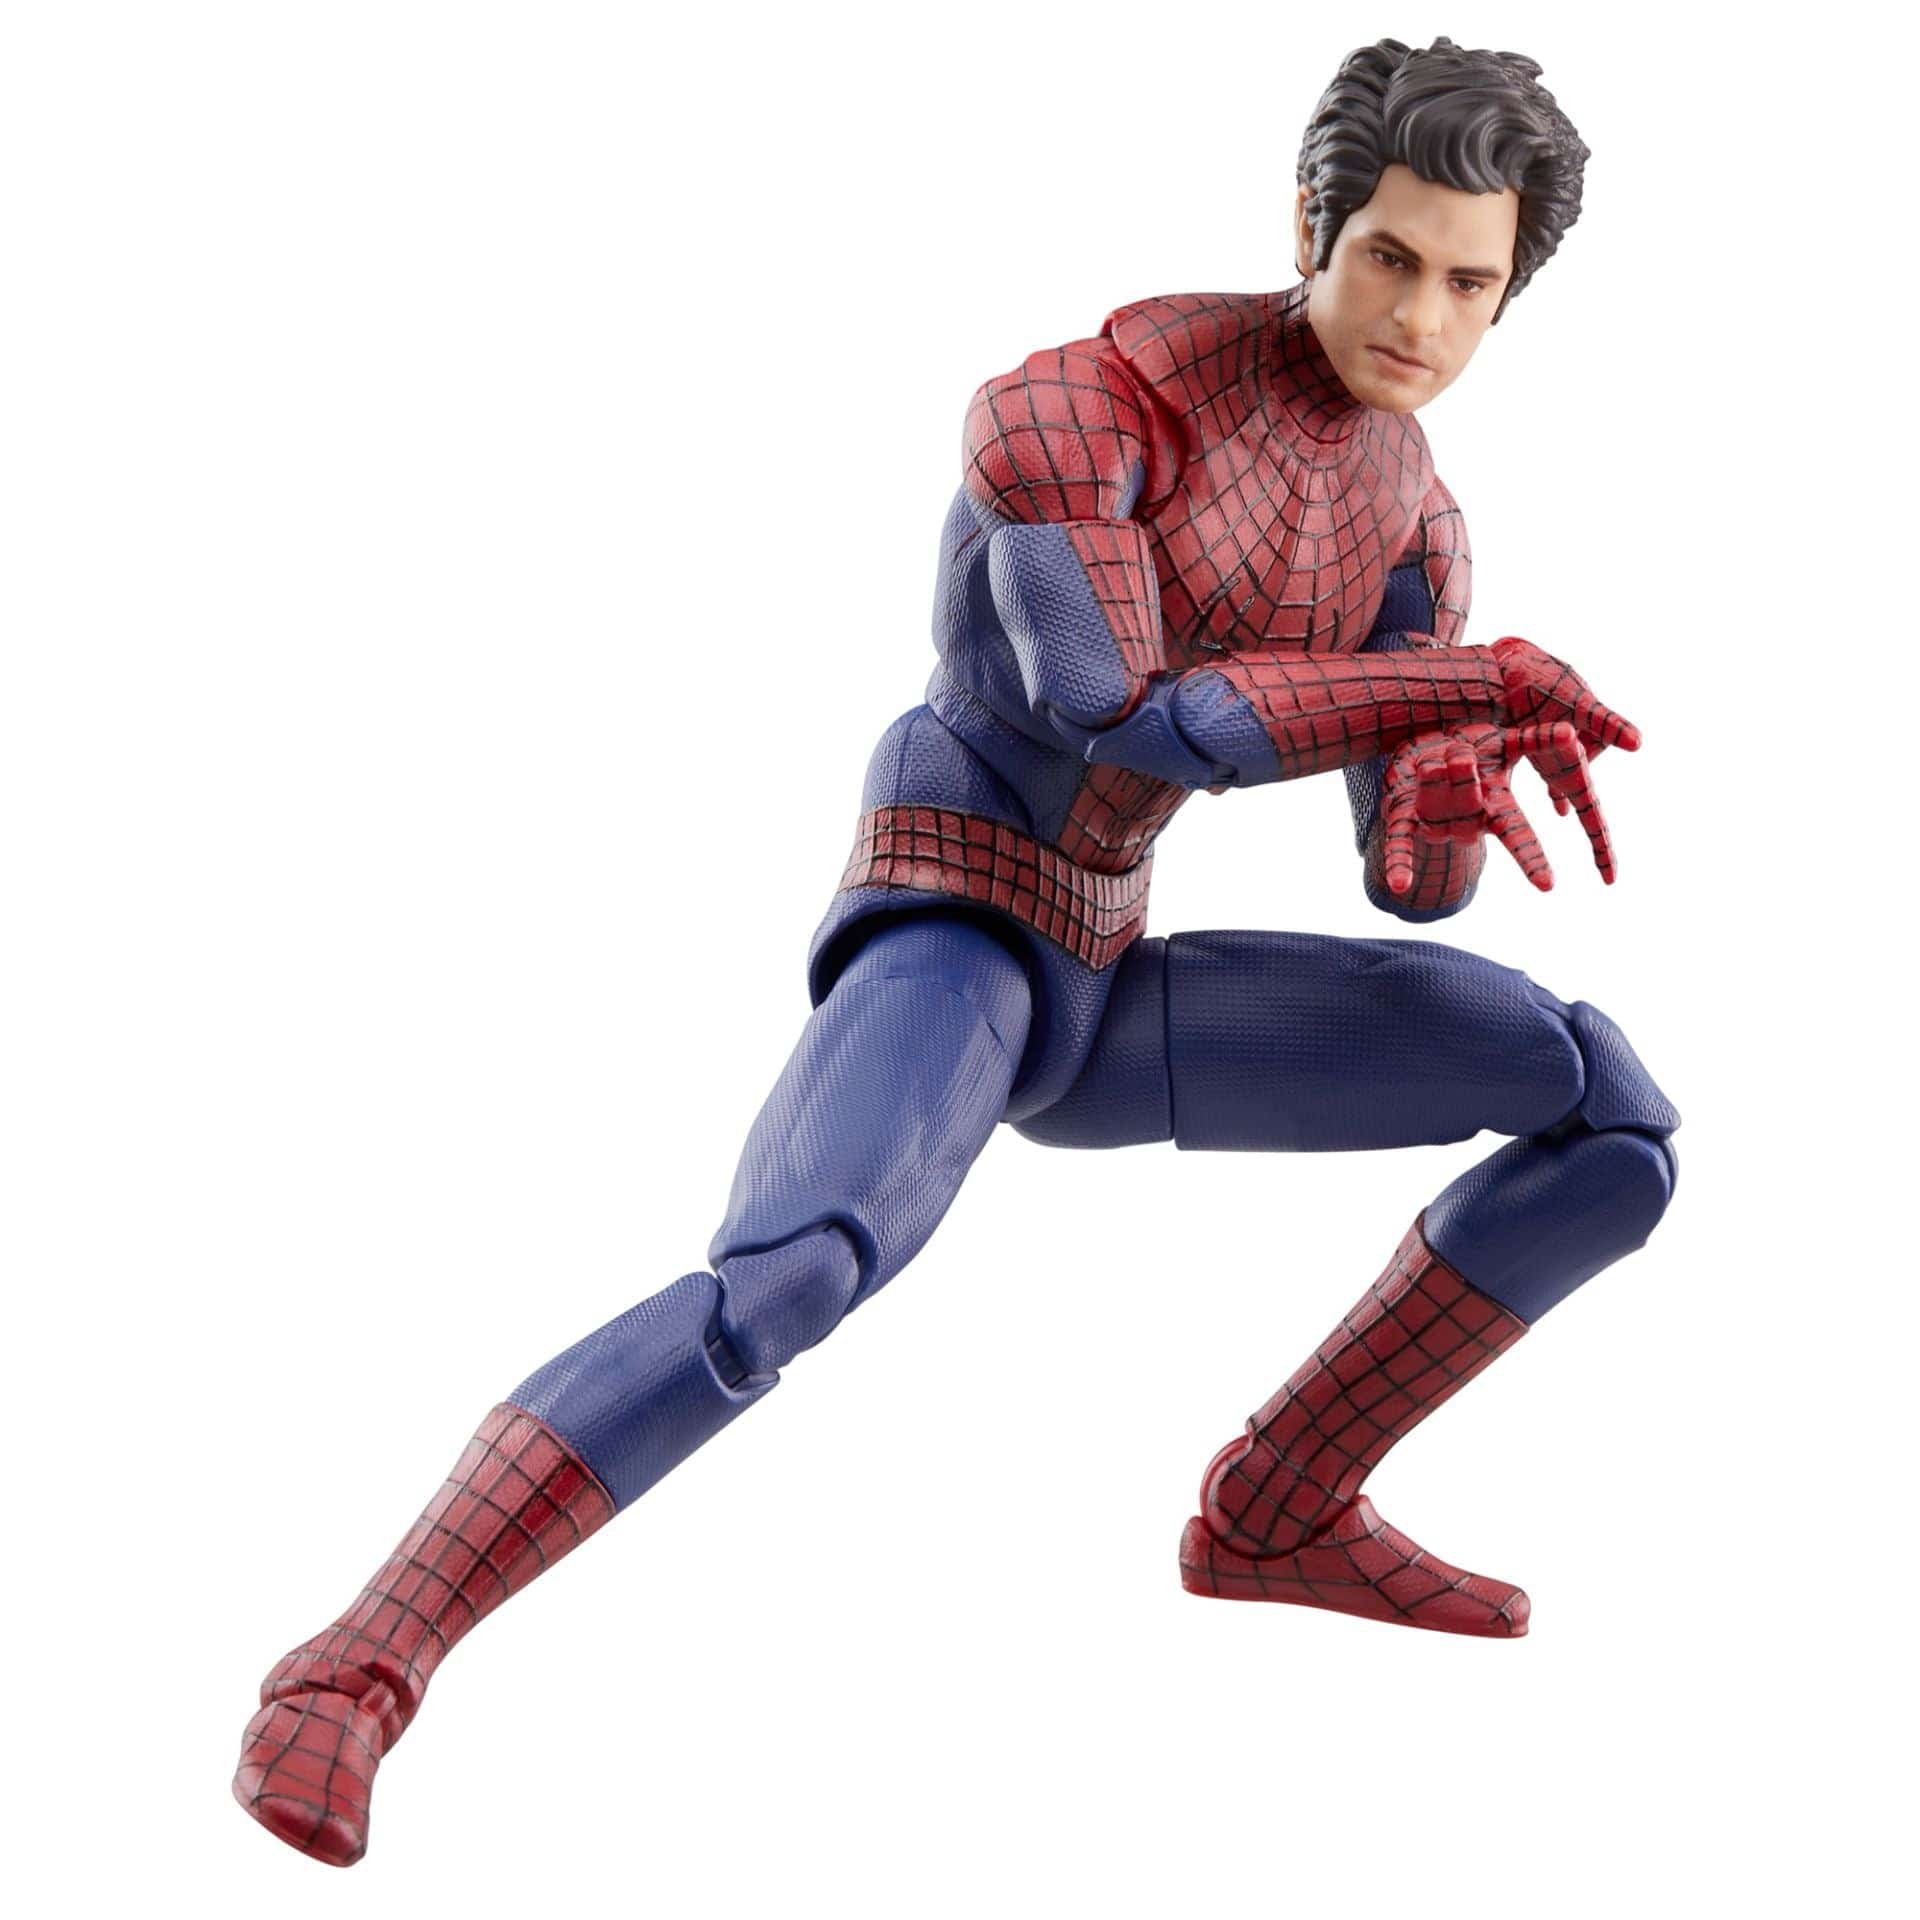 Hasbro Marvel Legends Series The Amazing Spider-Man 2 Spider-Man Action Figure